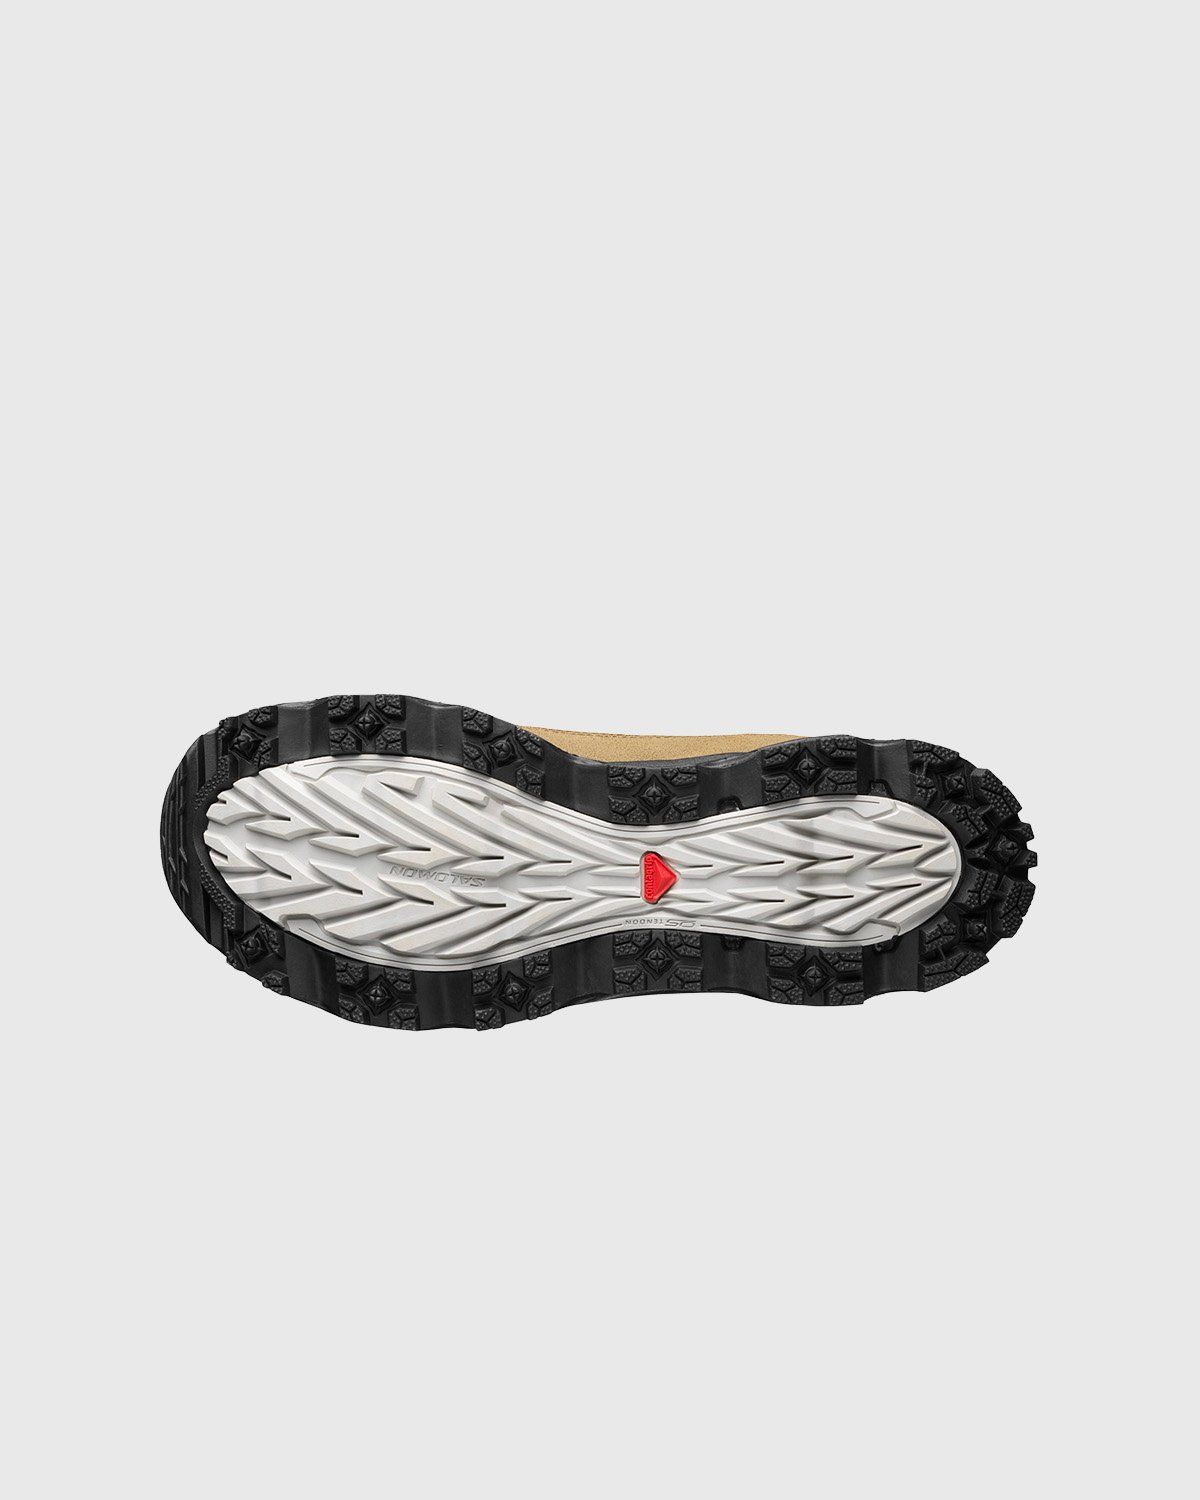 Salomon – RX Snow Moc 2 Advanced Kangaroo Tobacco Brown Black - Sneakers - Brown - Image 4